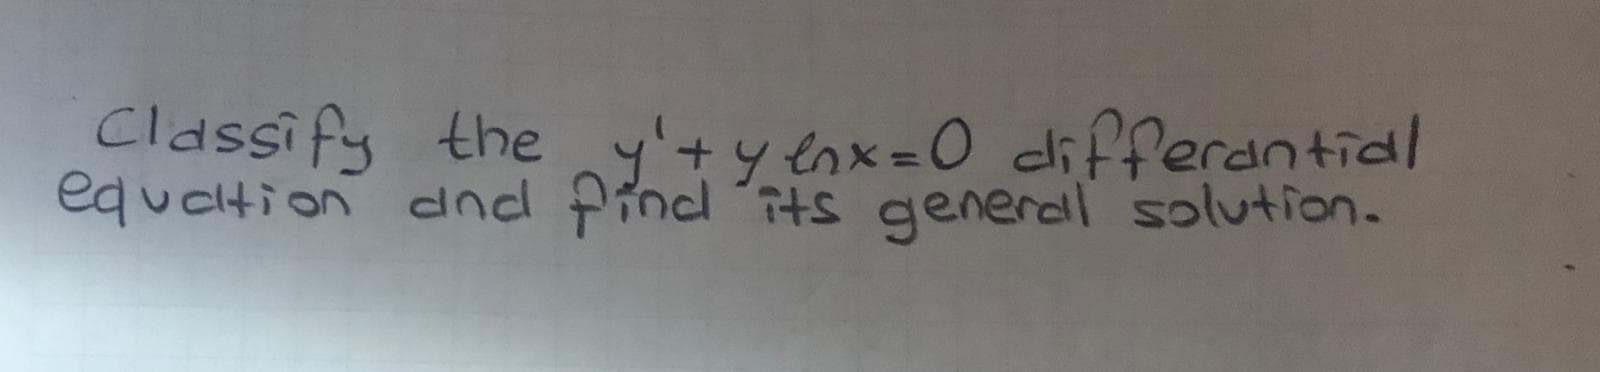 Classify the y'+y enx=0 dlifferantial
equeltion dnd Pind its generdl solvtion.
